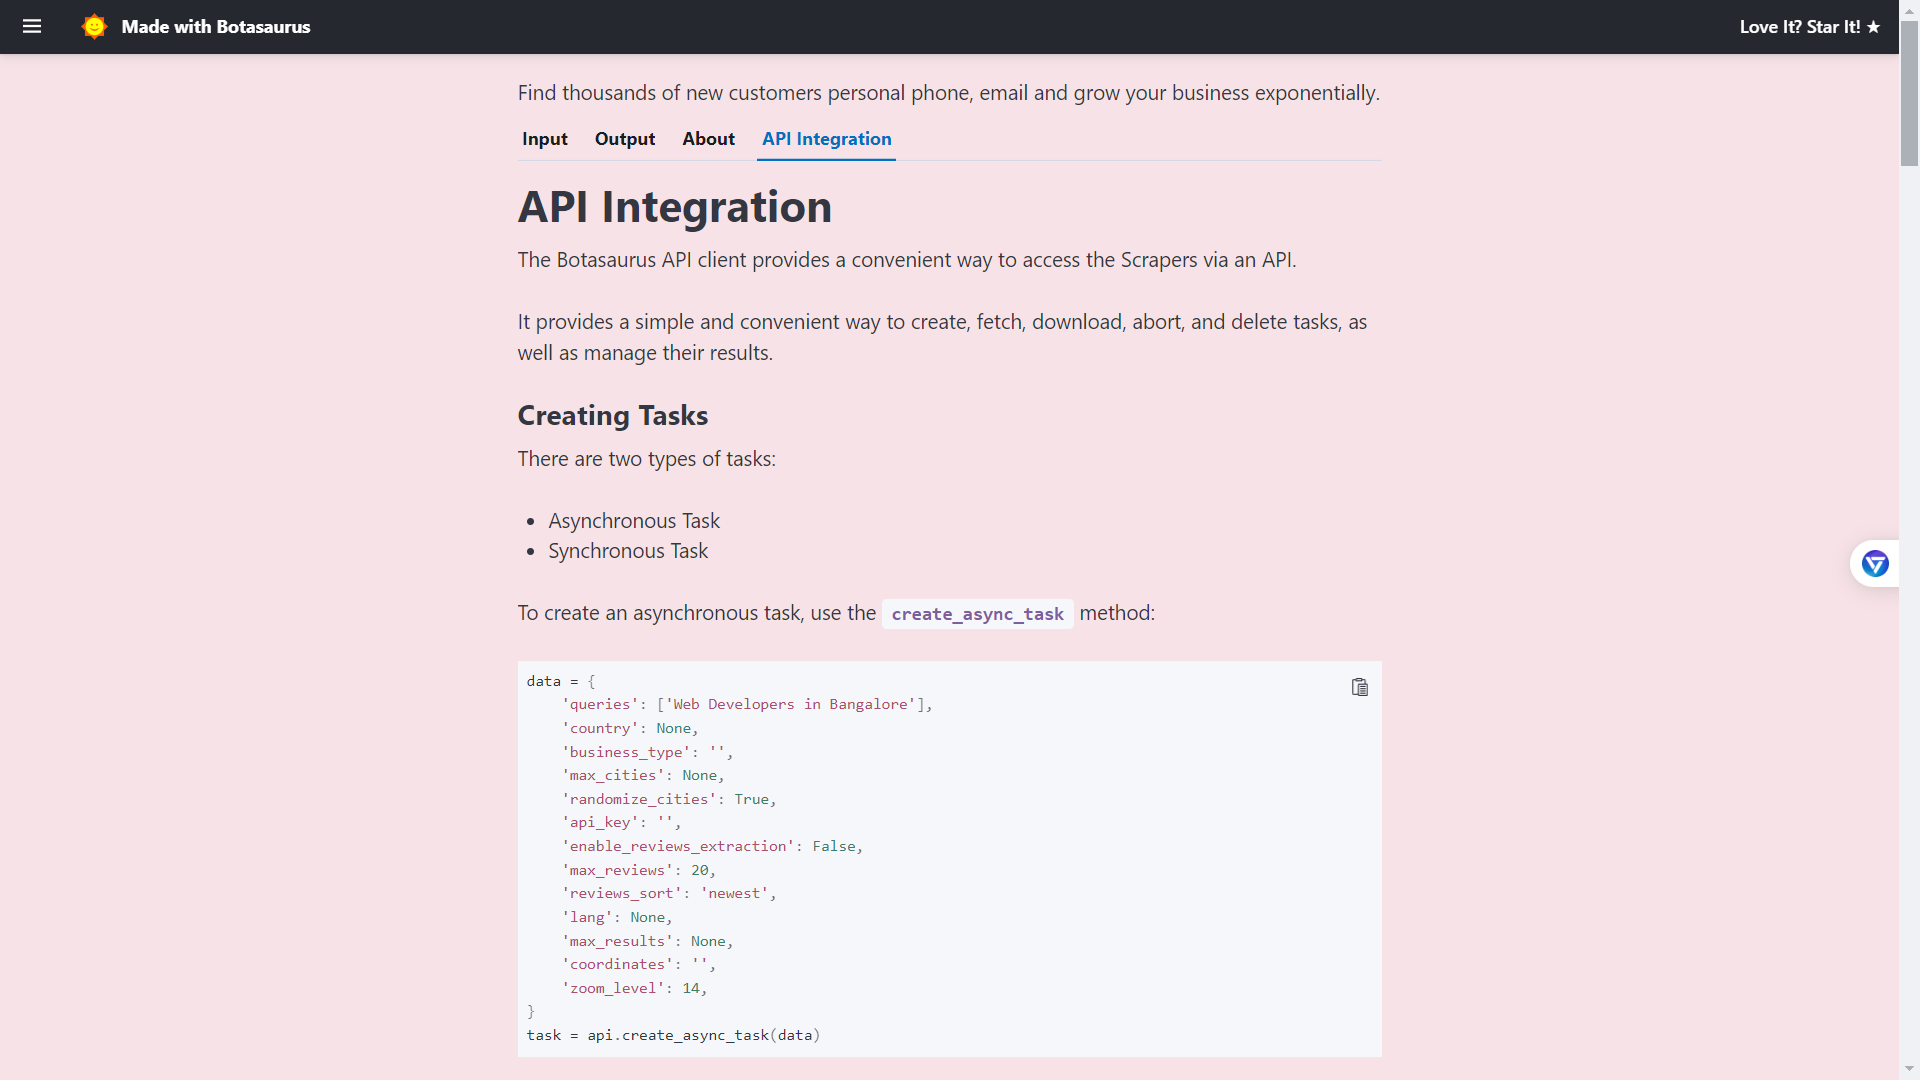 api-integration-page.png